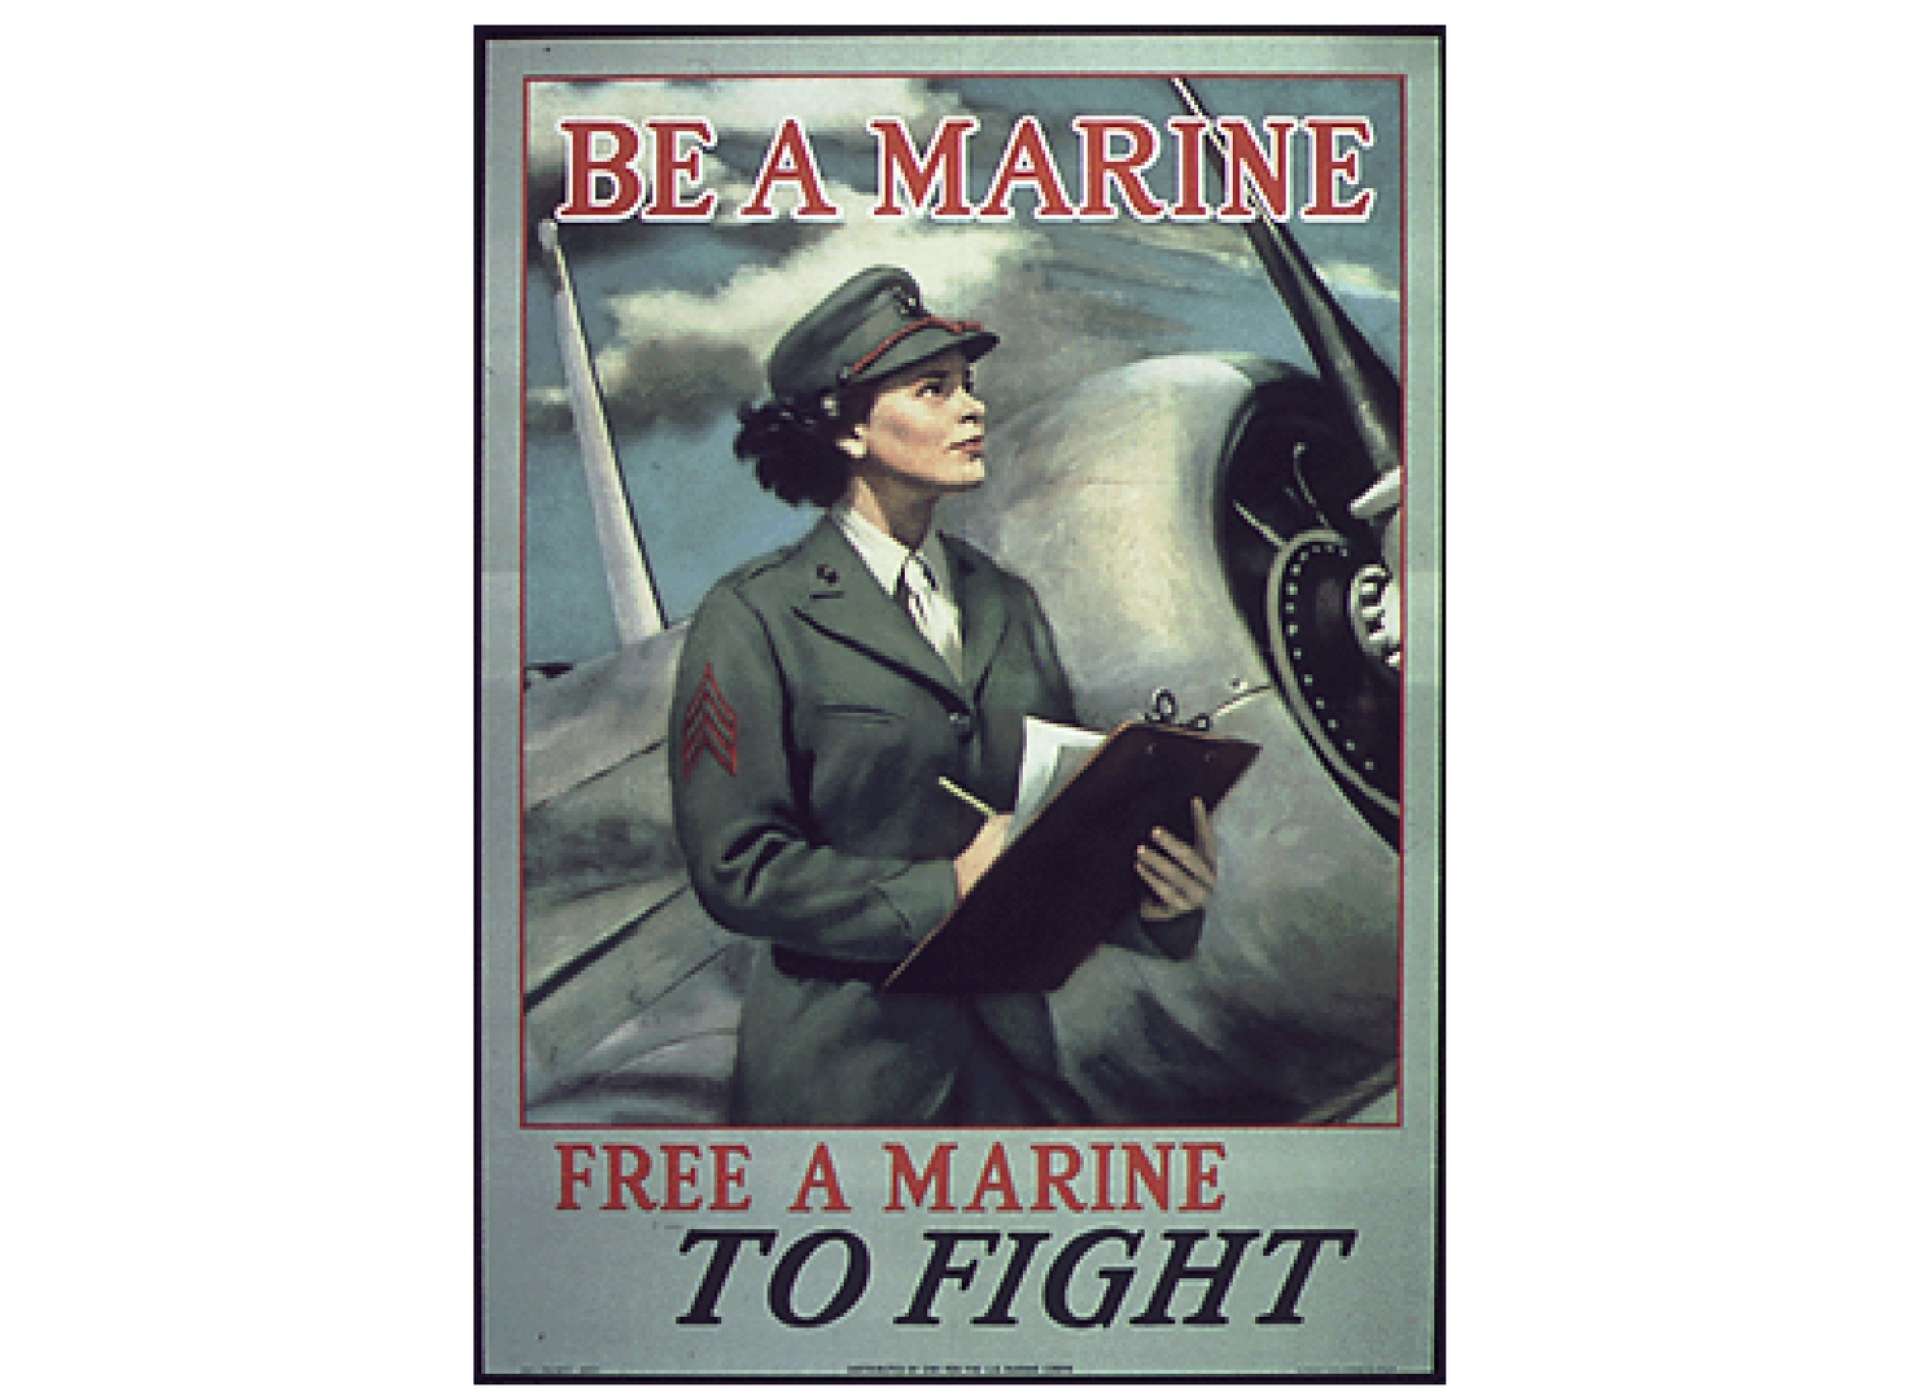 Marines poster